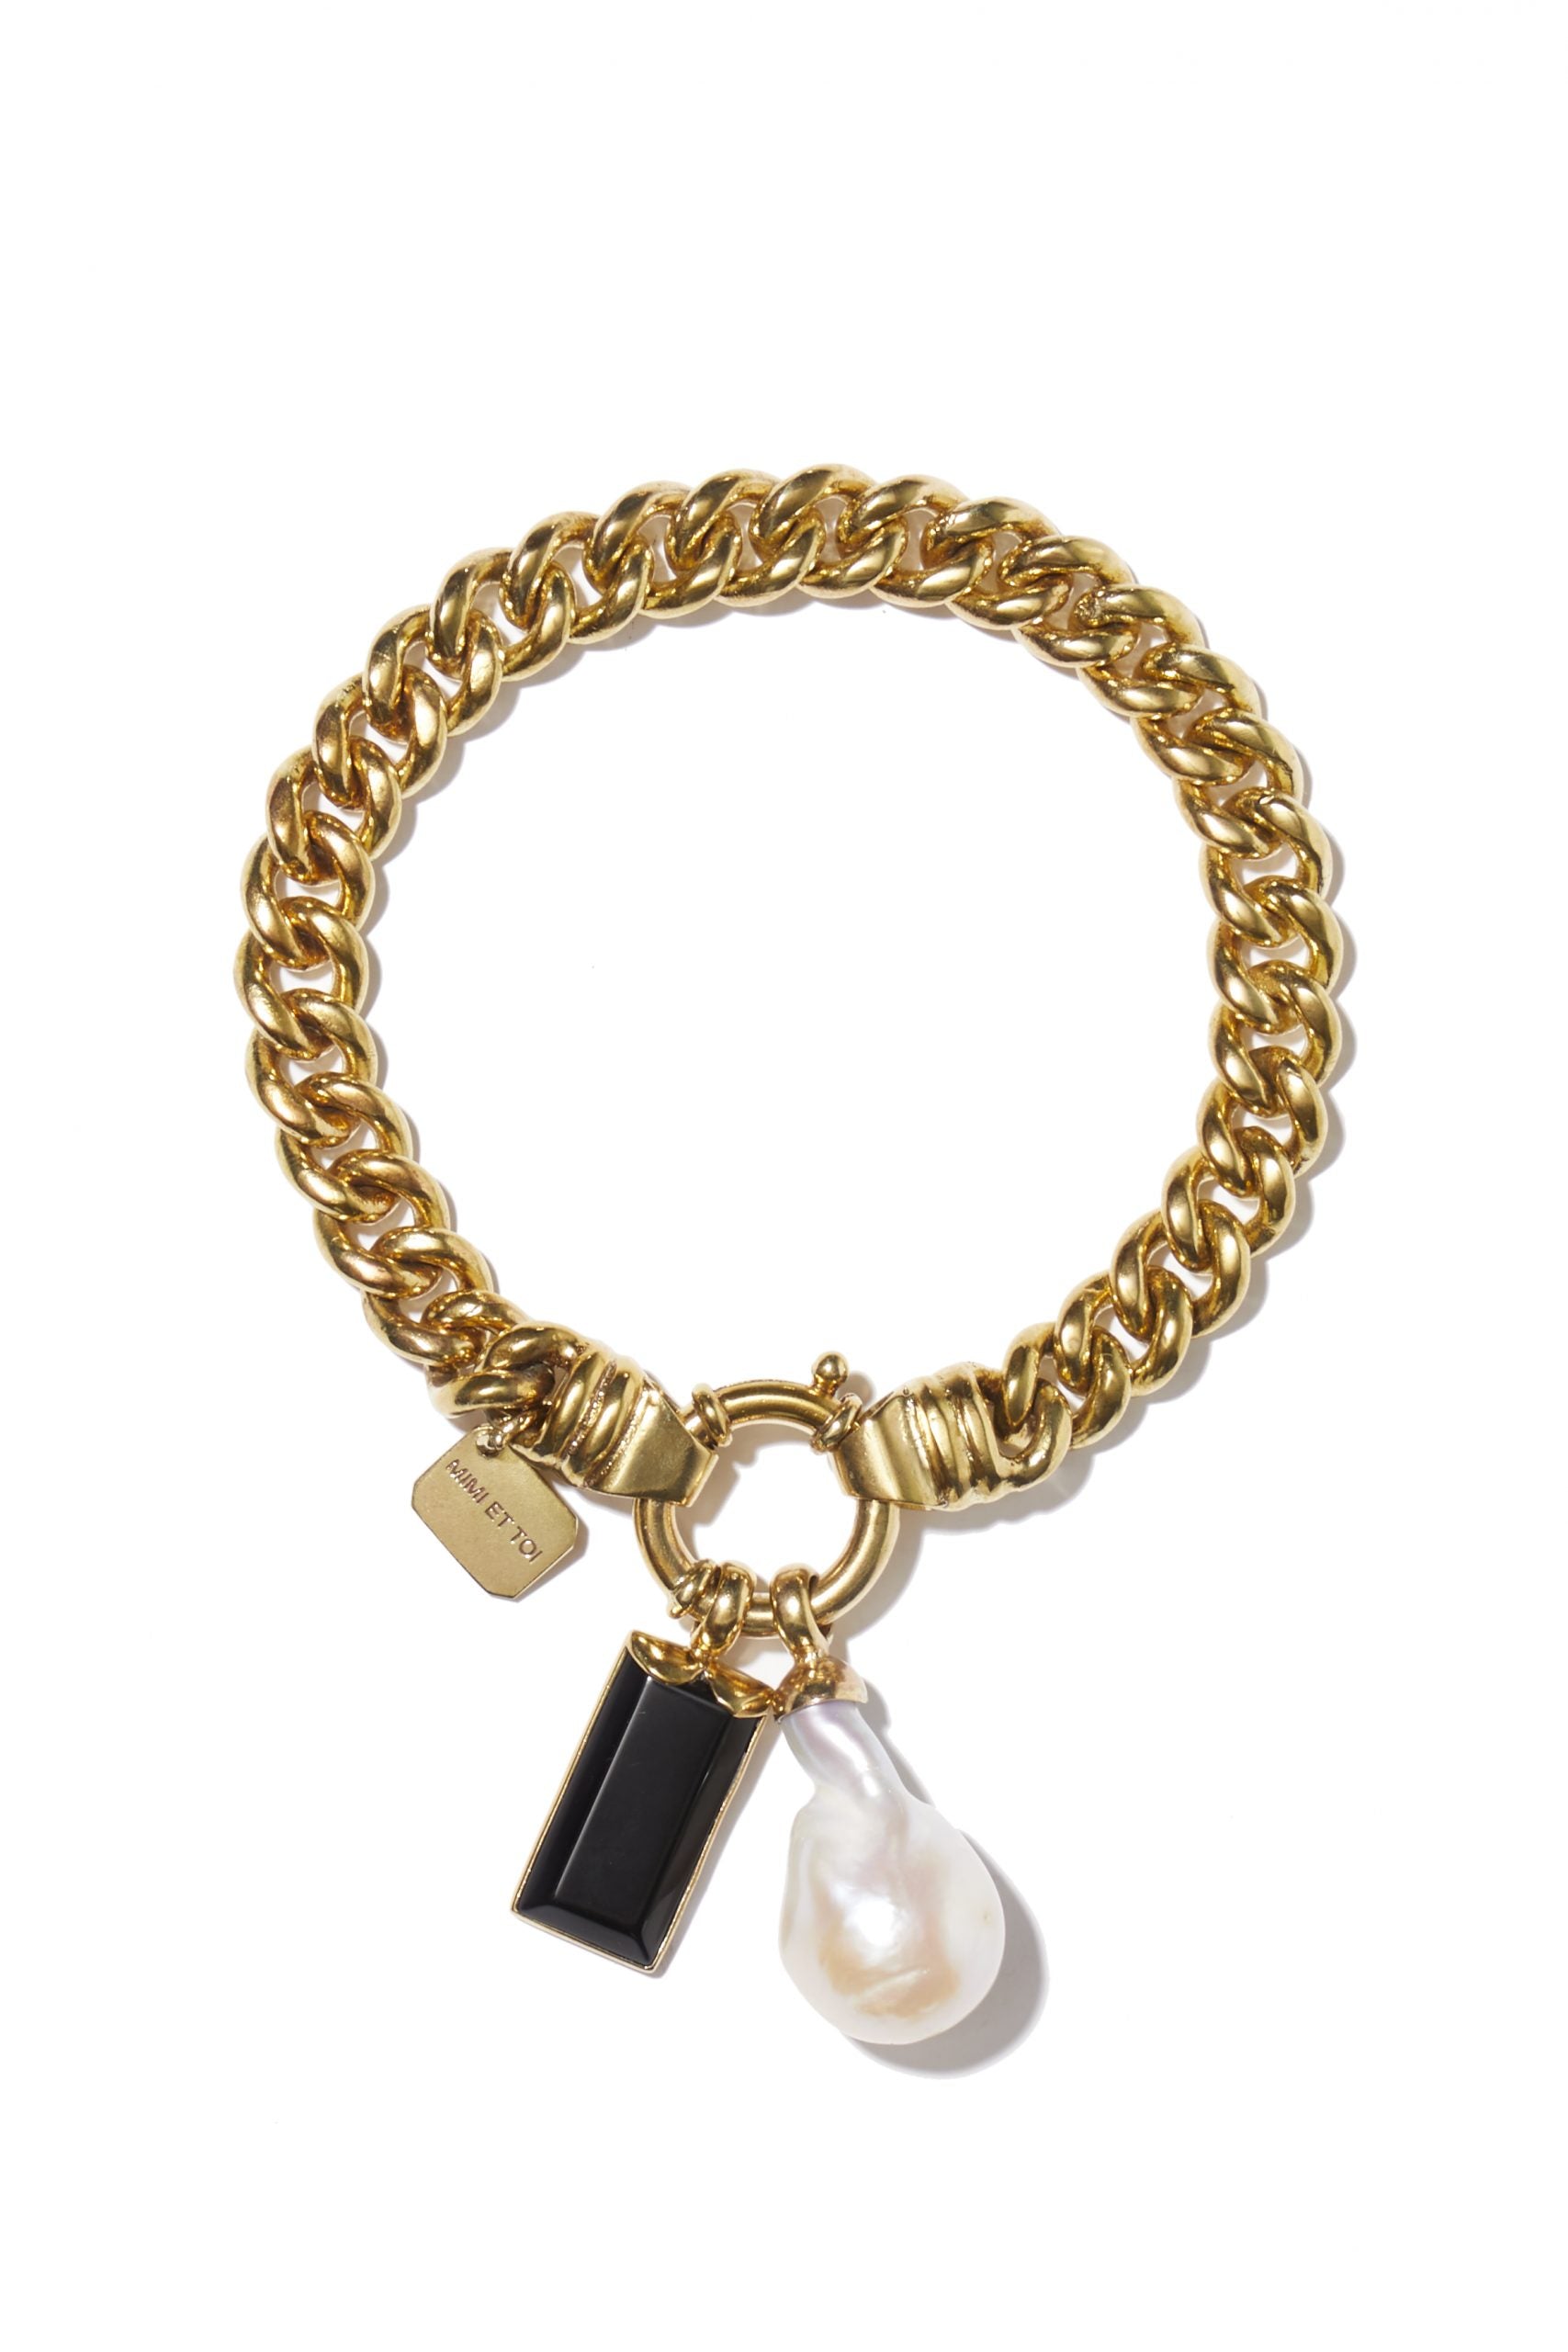 Changement brass bracelet with pendants